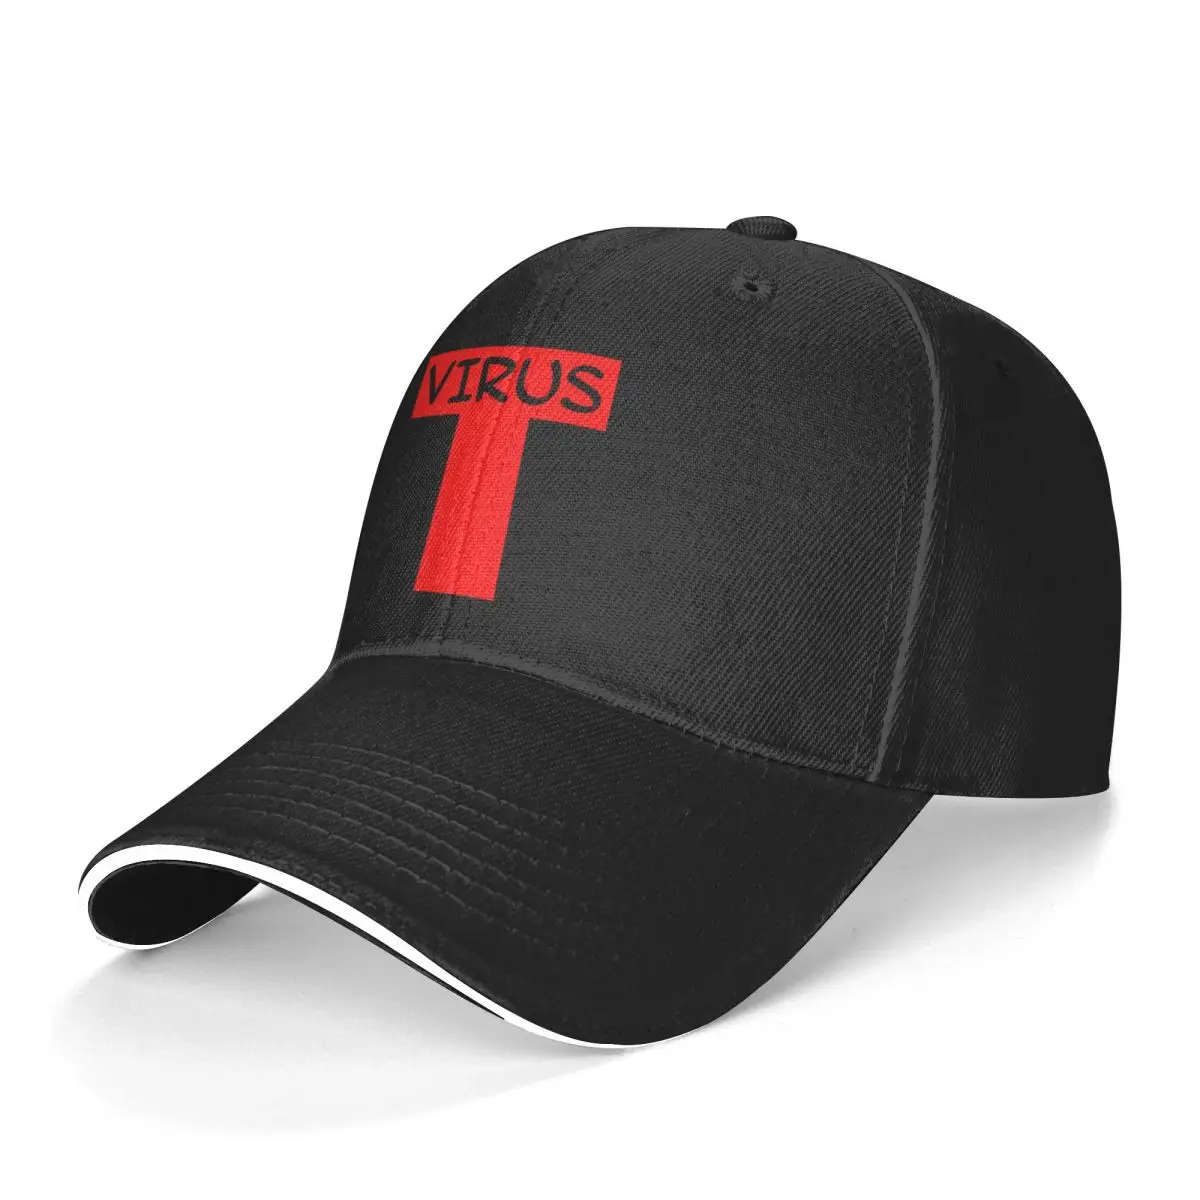 Gorillaz Baseball Cap T VIRUS Fitted Trucker Hat Summer Male Outdoor Print Baseball Caps